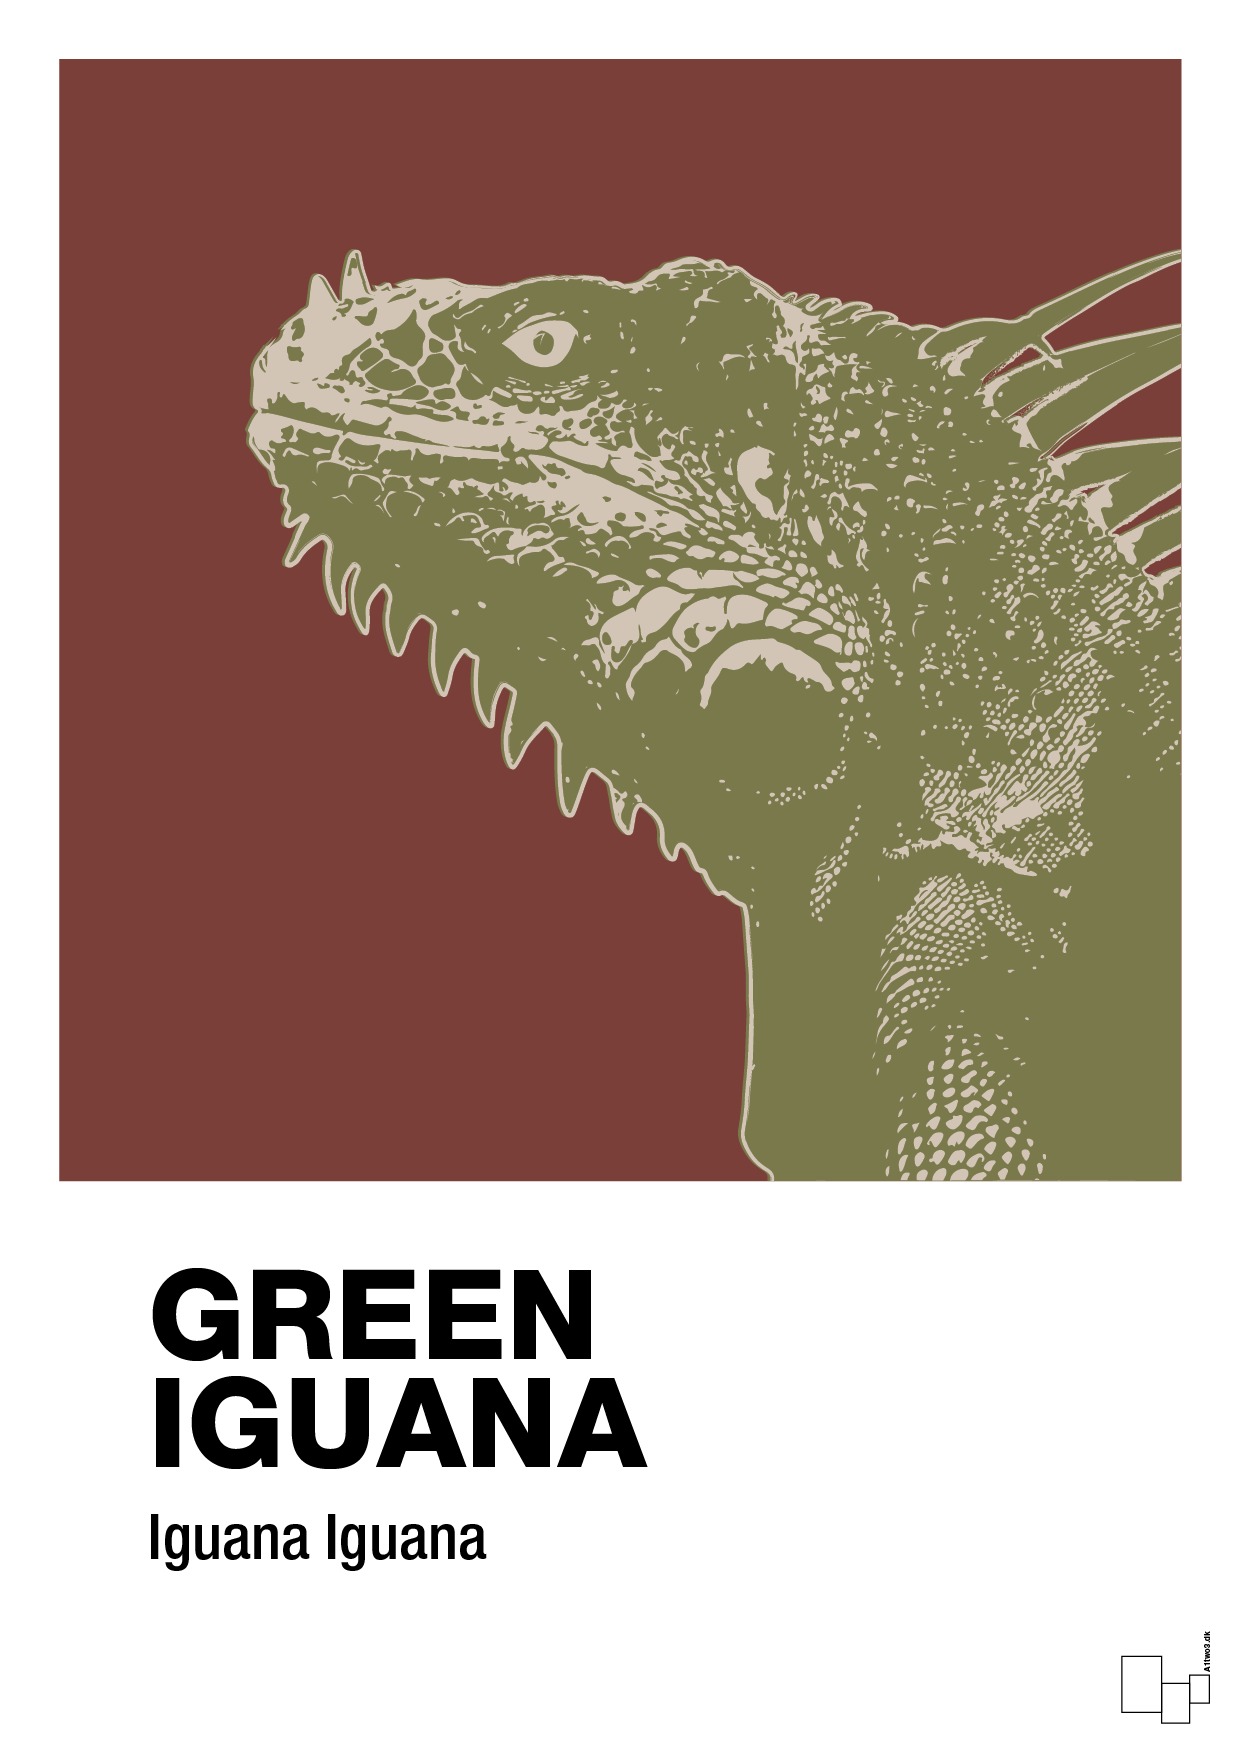 green iguana - Plakat med Videnskab i Red Pepper